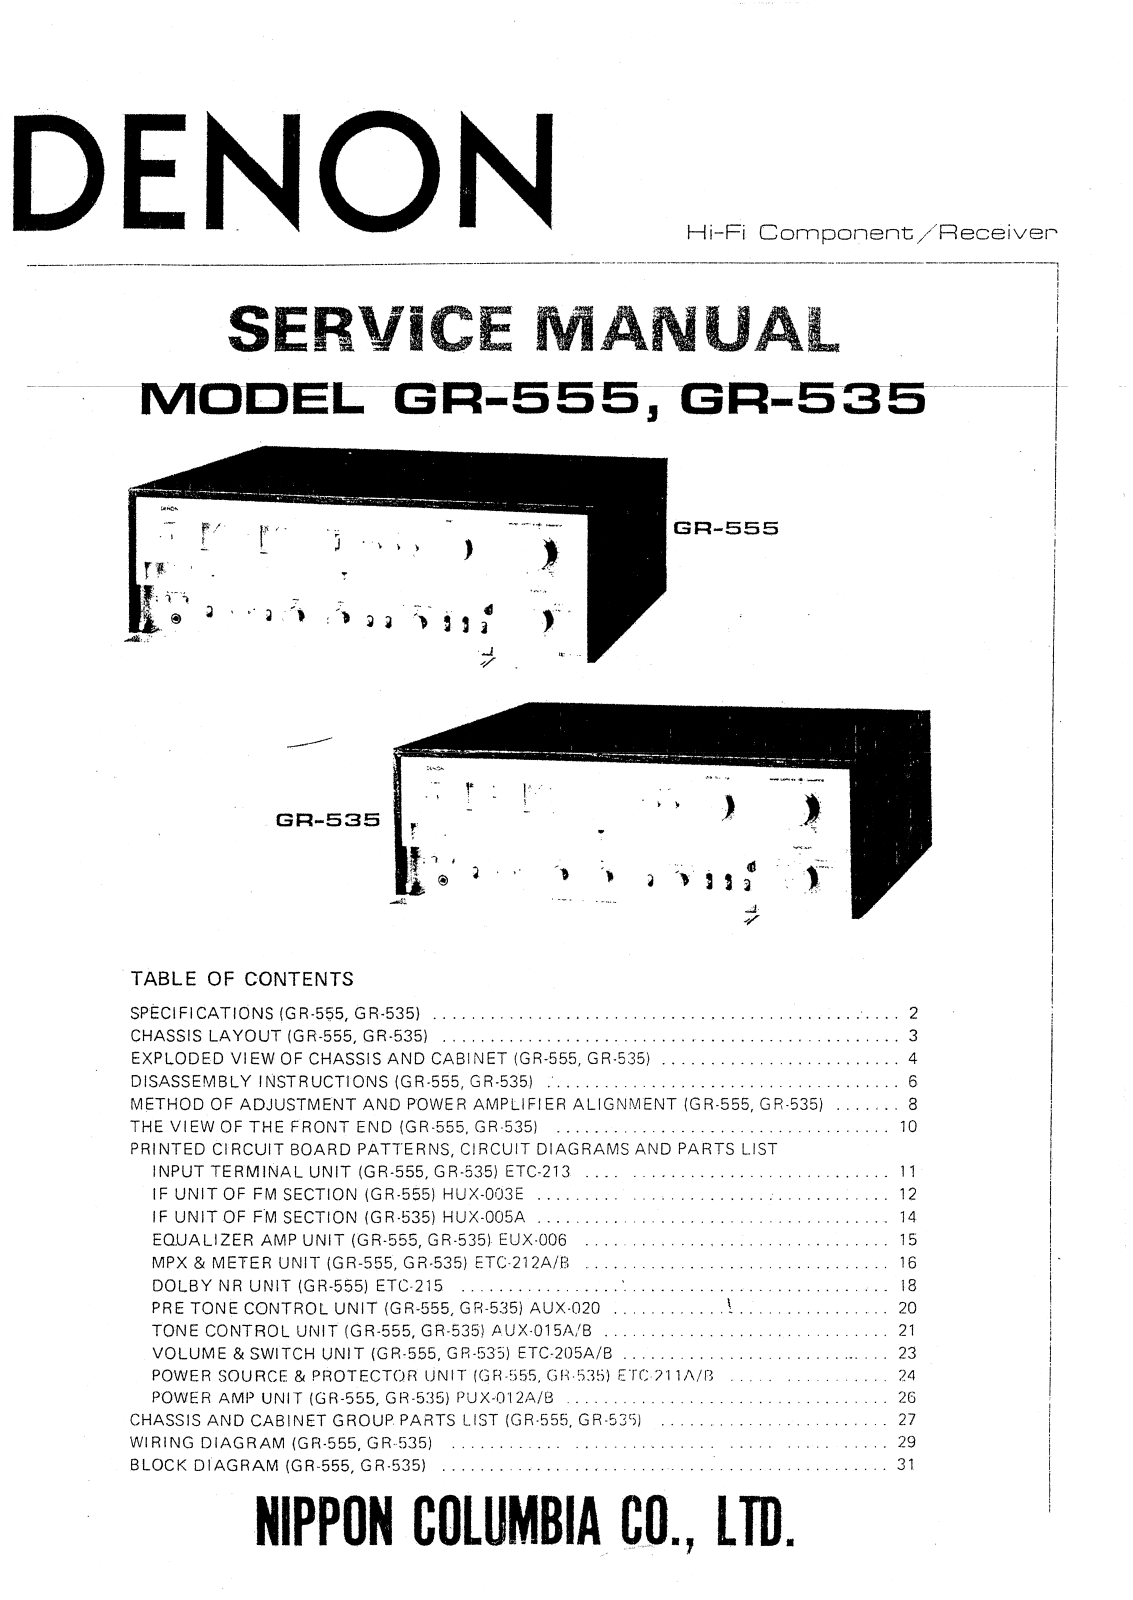 Denon GR-555, GR-535 Service Manual